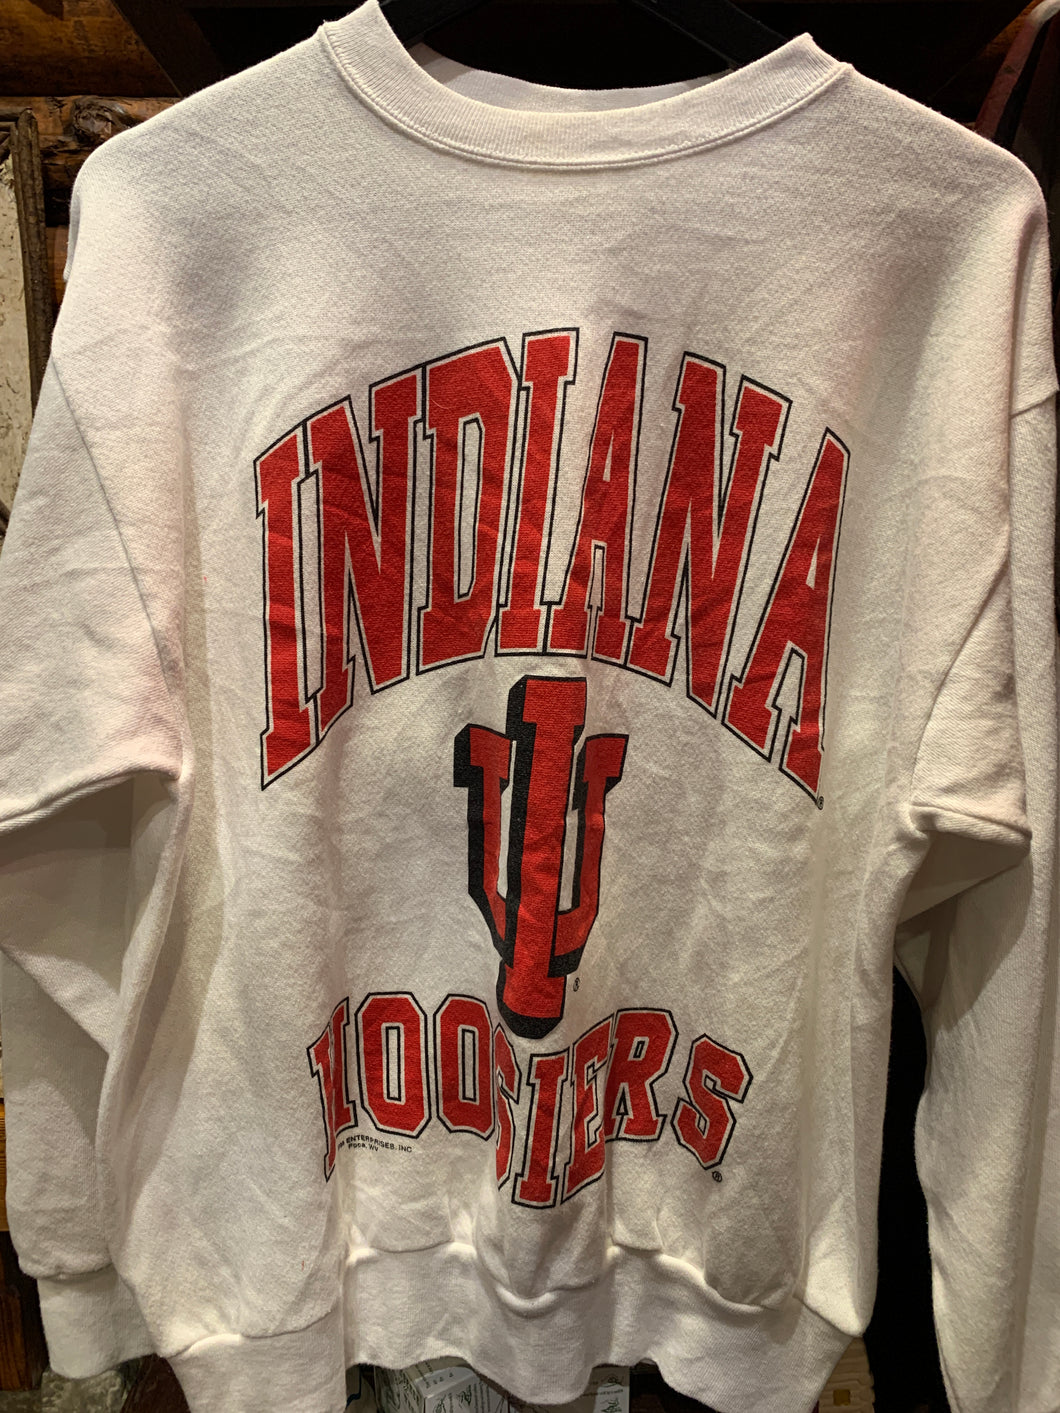 Vintage Indiana Hoosiers Crew Sweater, Small - Medium